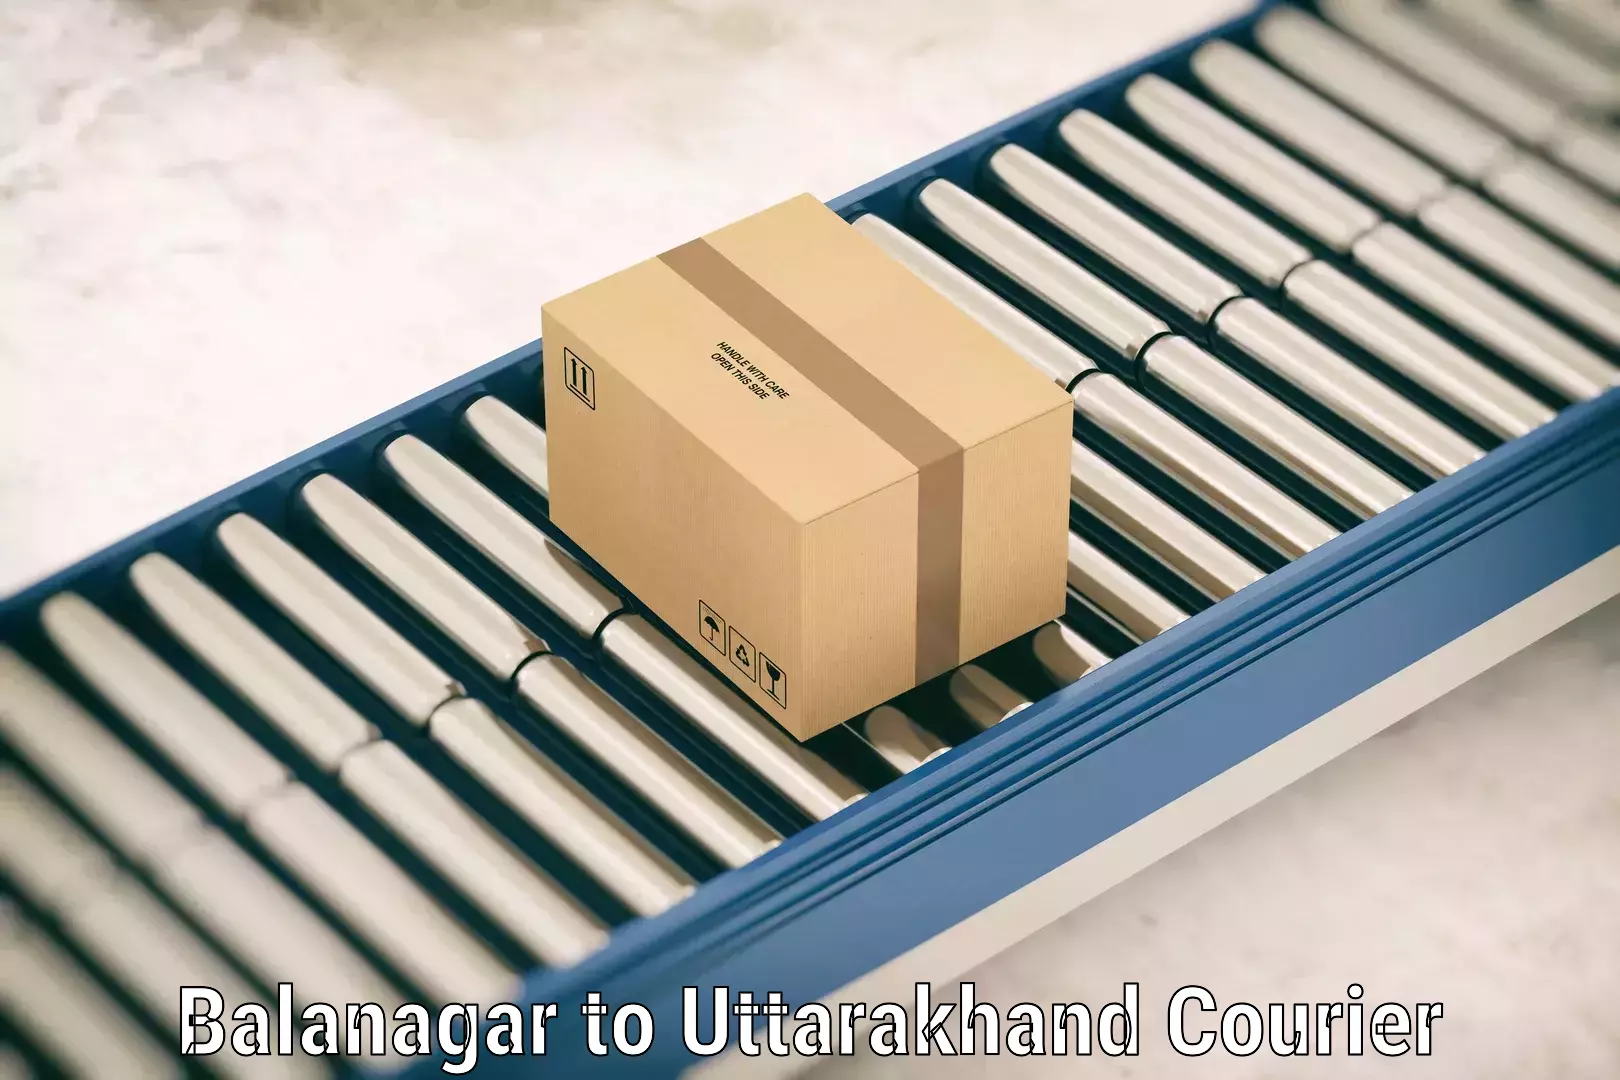 Luggage storage and delivery in Balanagar to Srinagar Pauri Garhwal